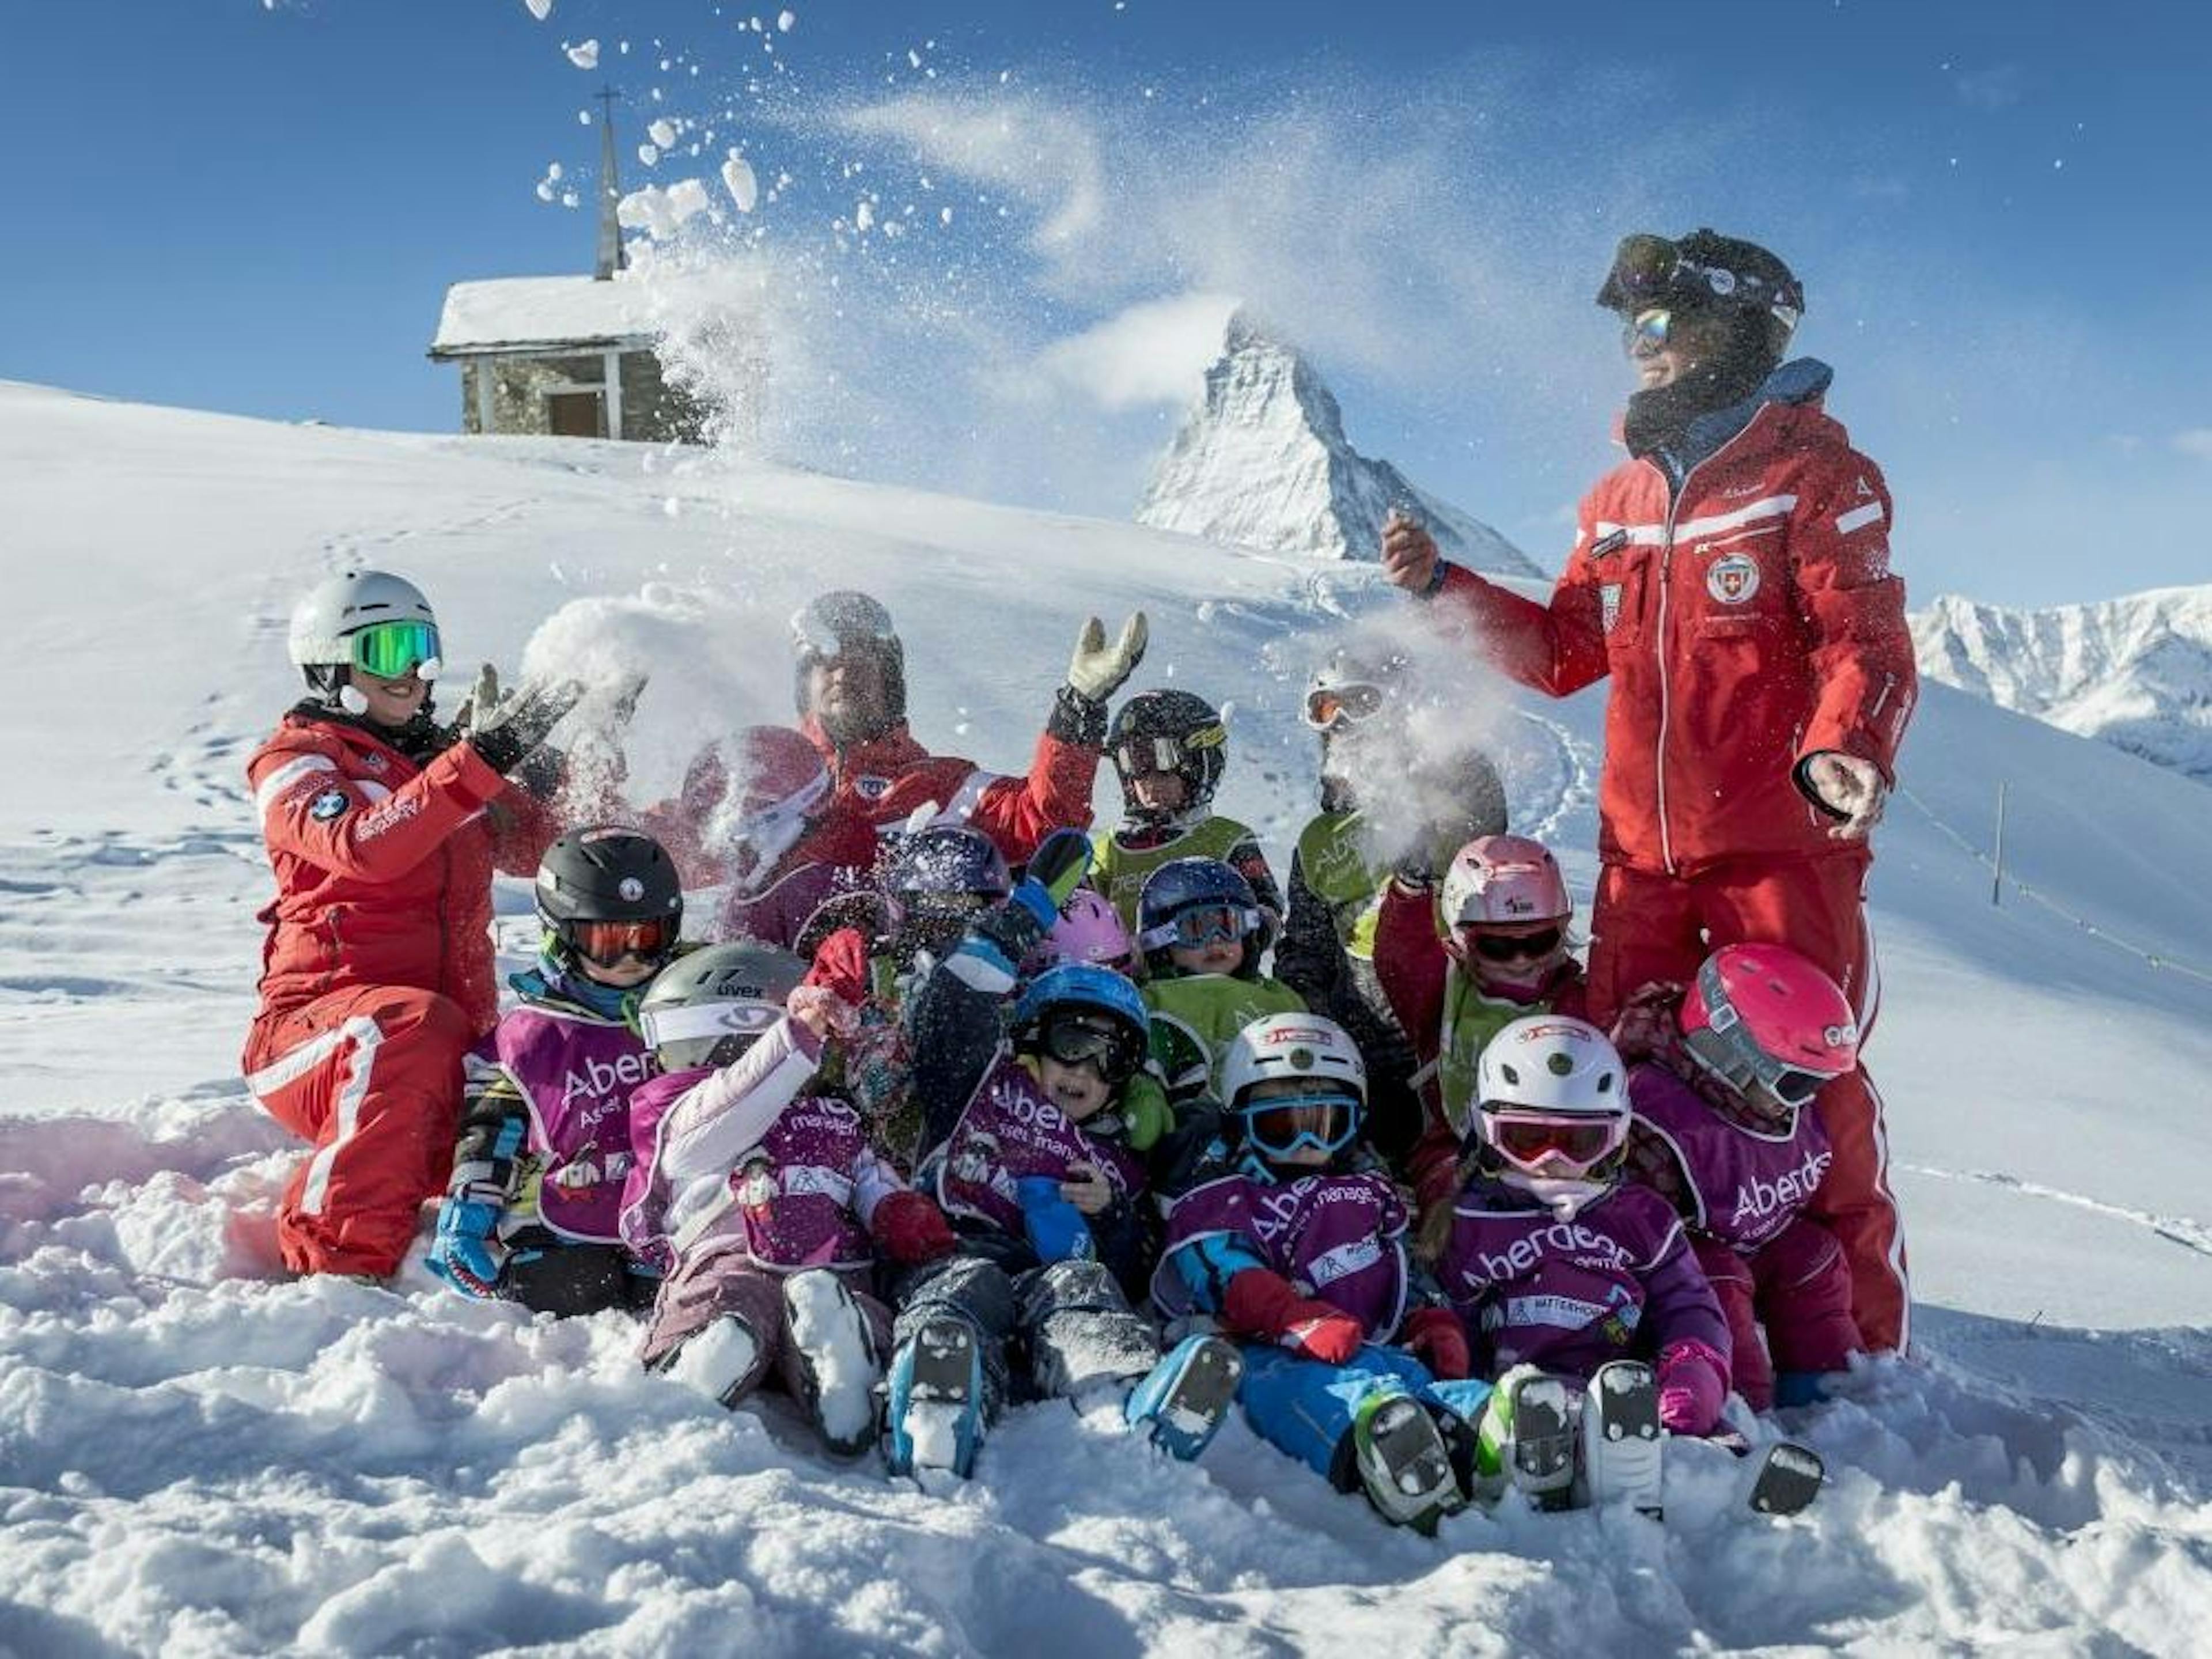 Children ski school (Photo: Zermatters)